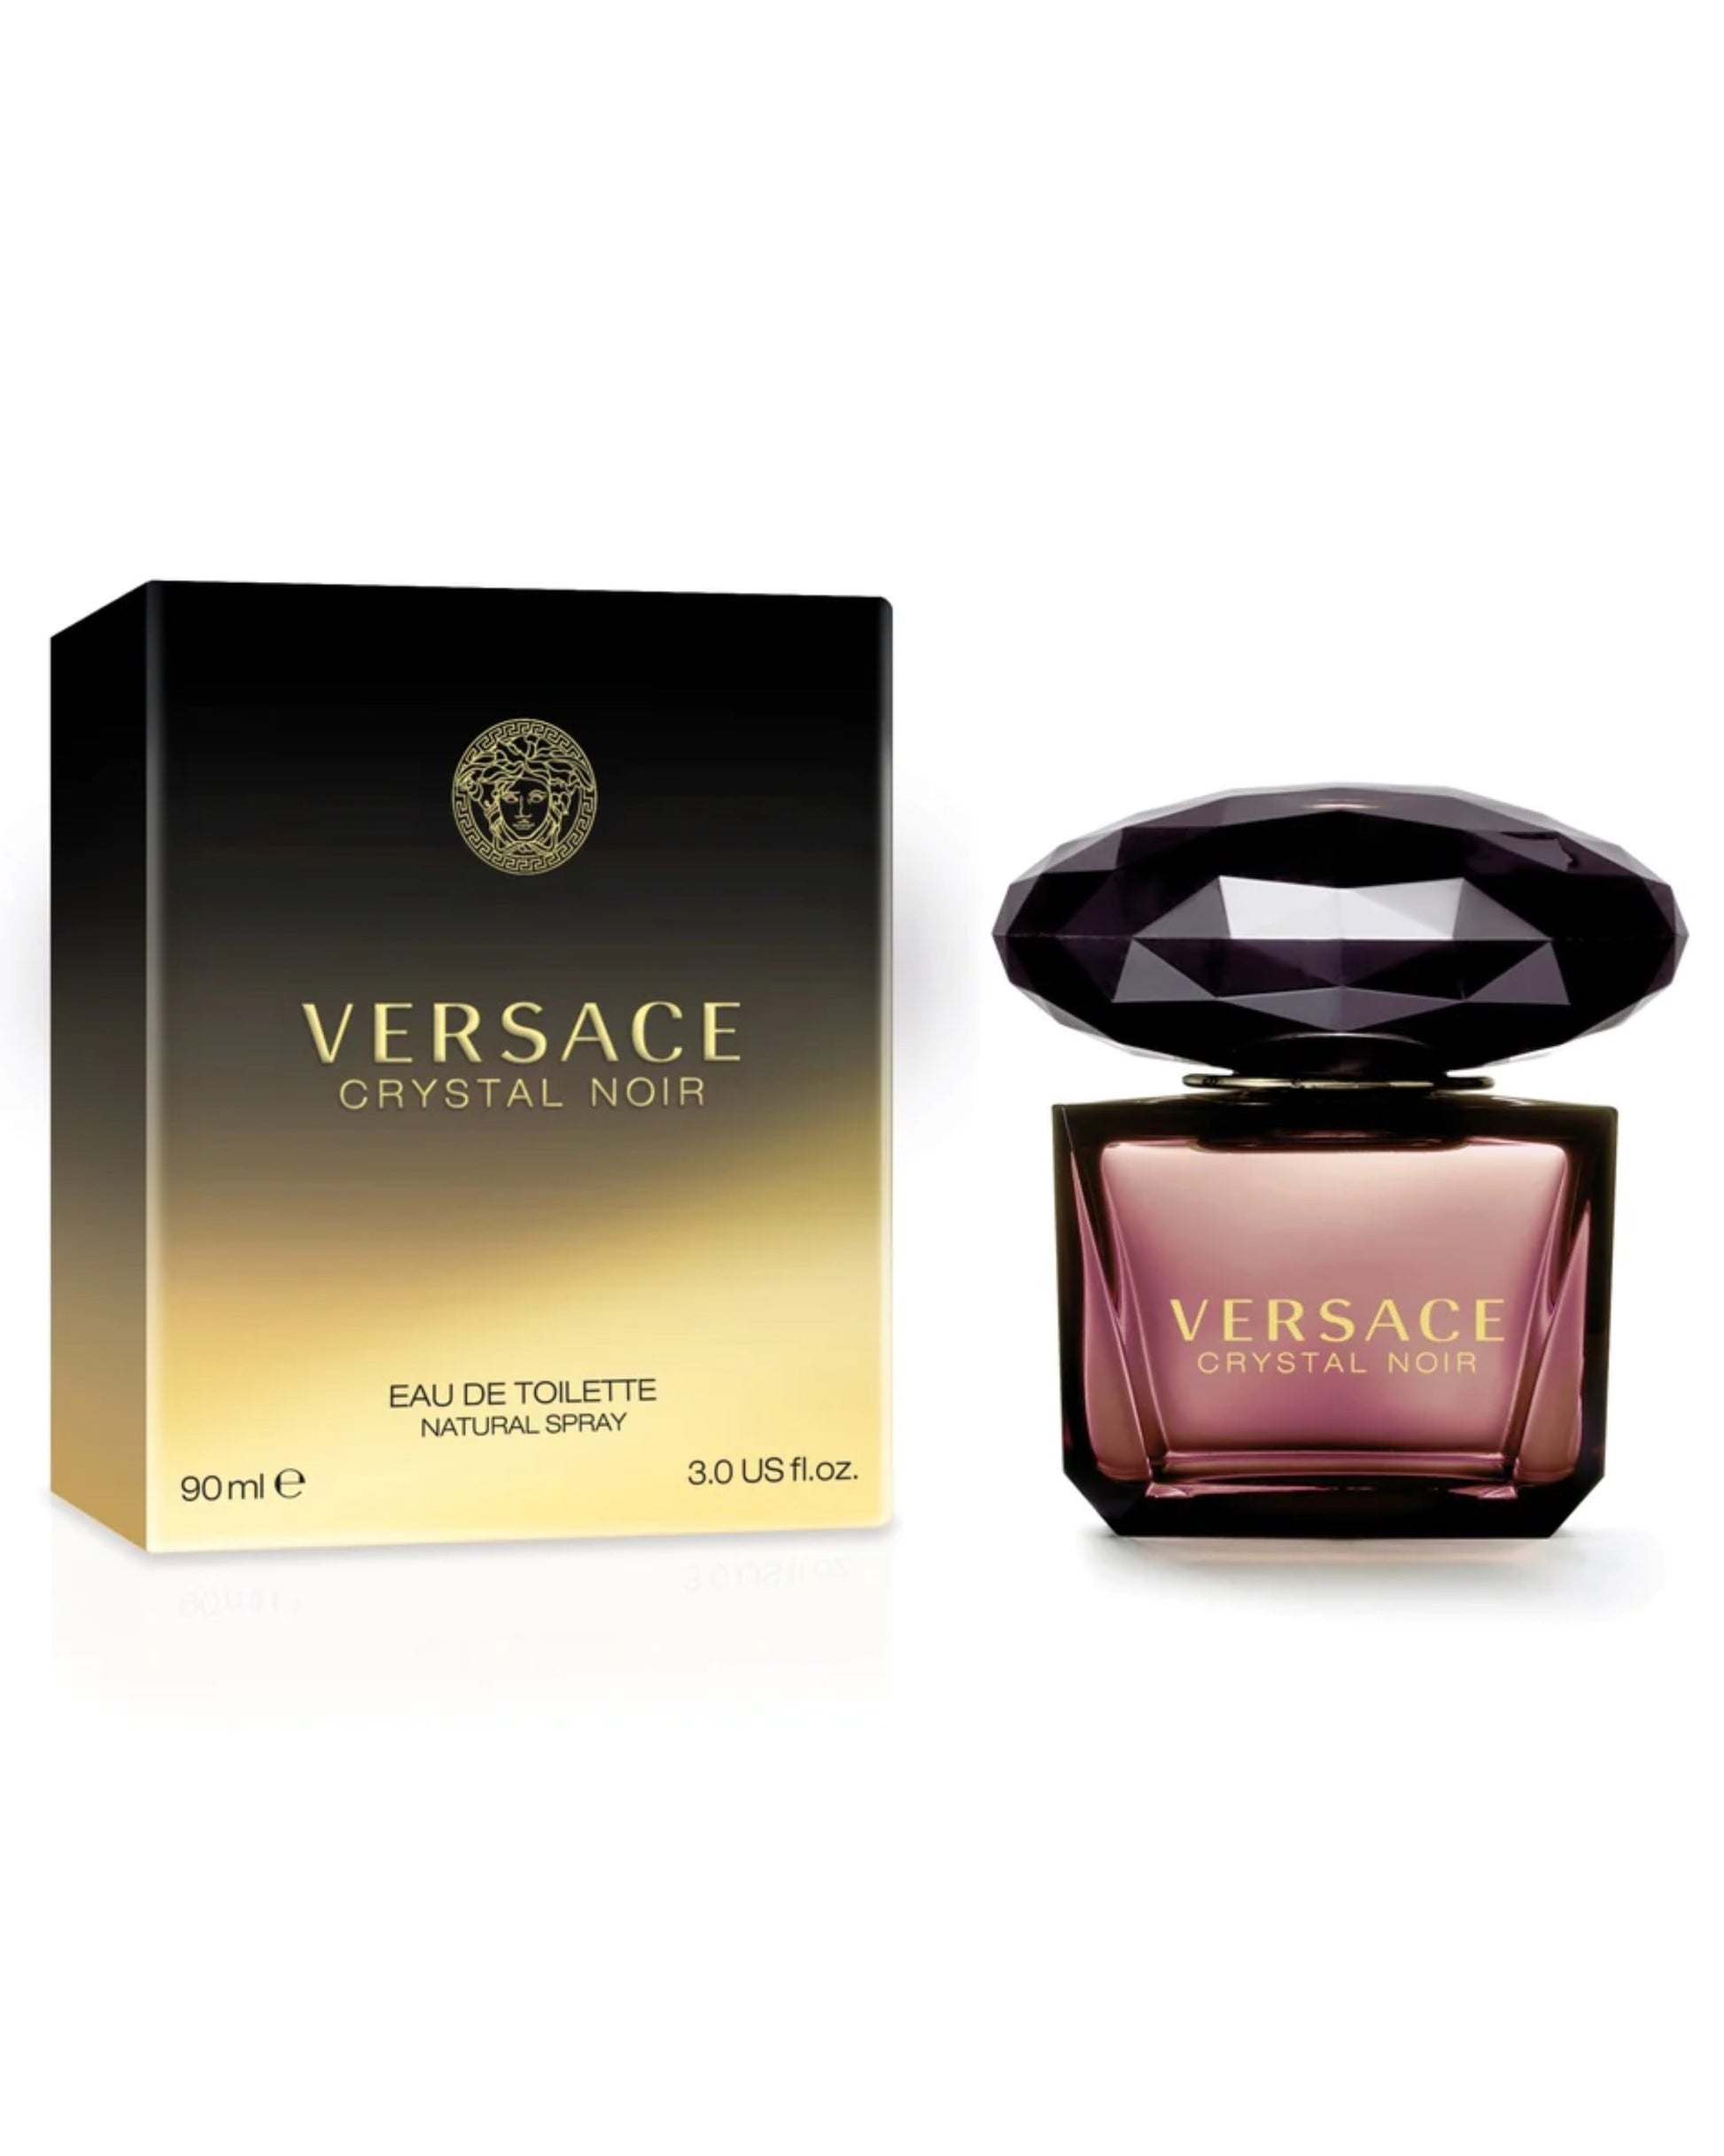 VERSACE - CRYSTAL NOIR Eau De Toiletteforyou-vente de parfum original au Maroc-parfum original Maroc-prix maroc-foryou parfum original-authentique-parfum authentique-prix maroc